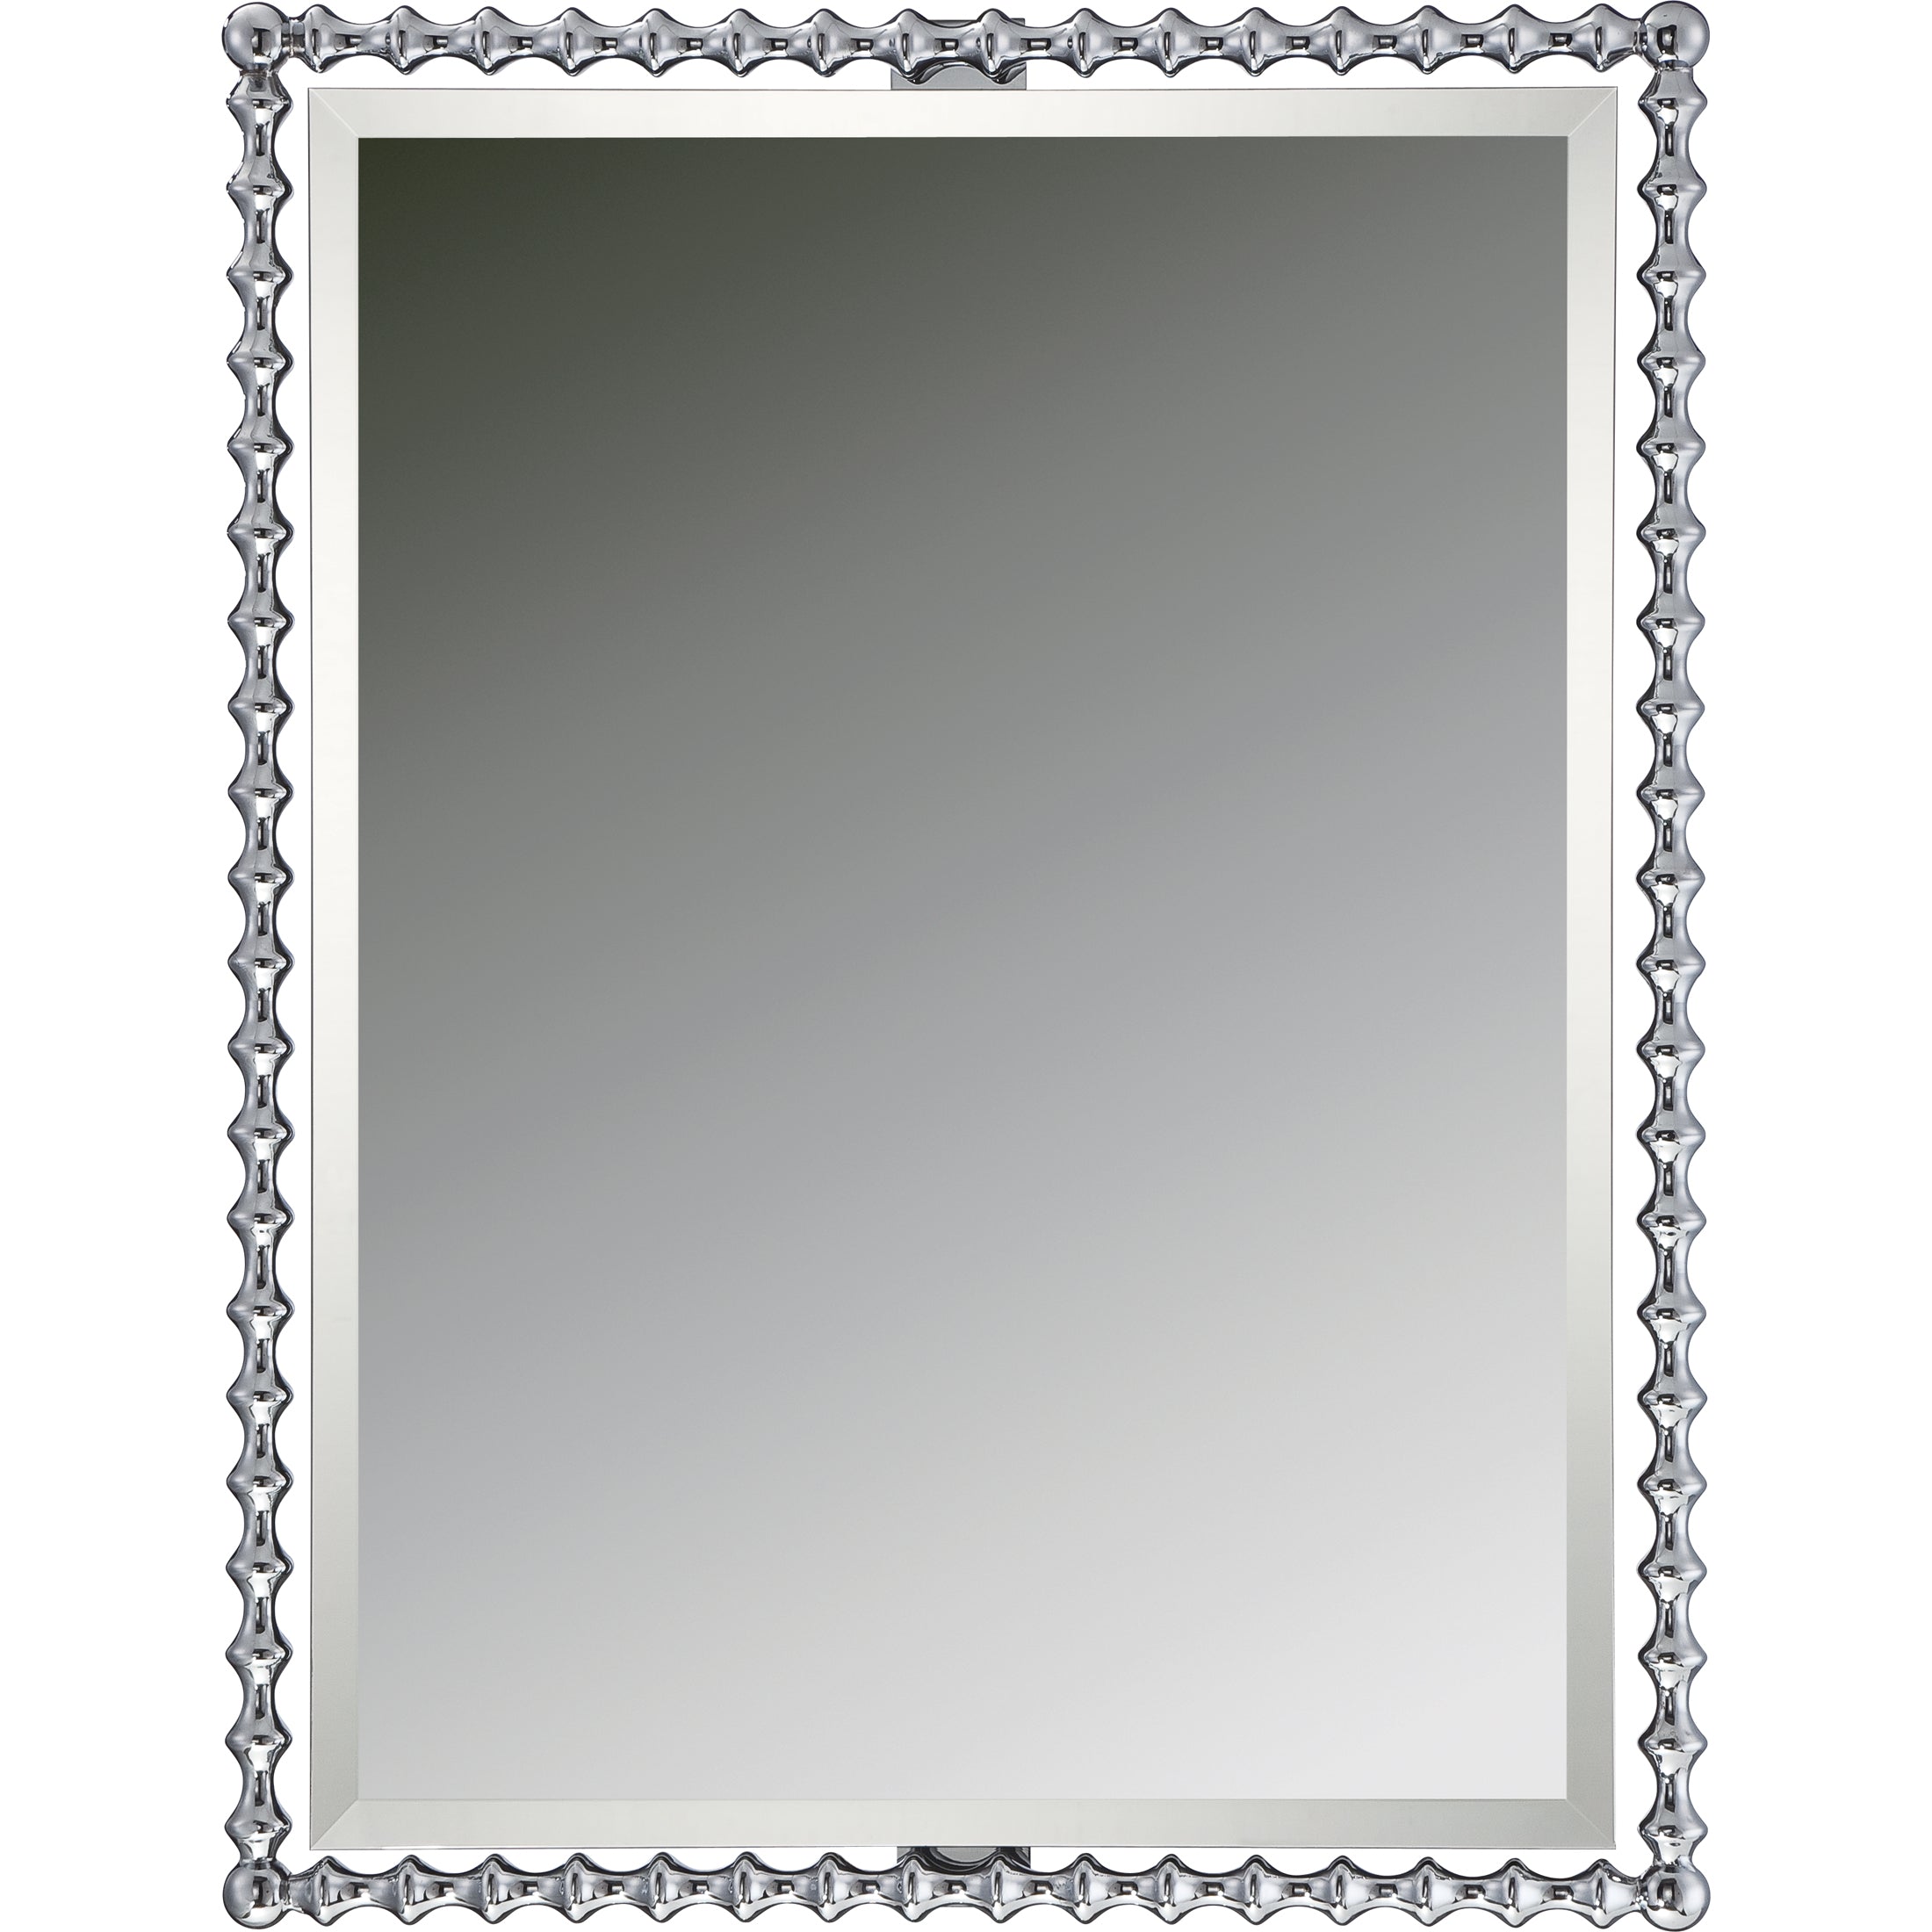 Shelburne Mirror Polished Chrome